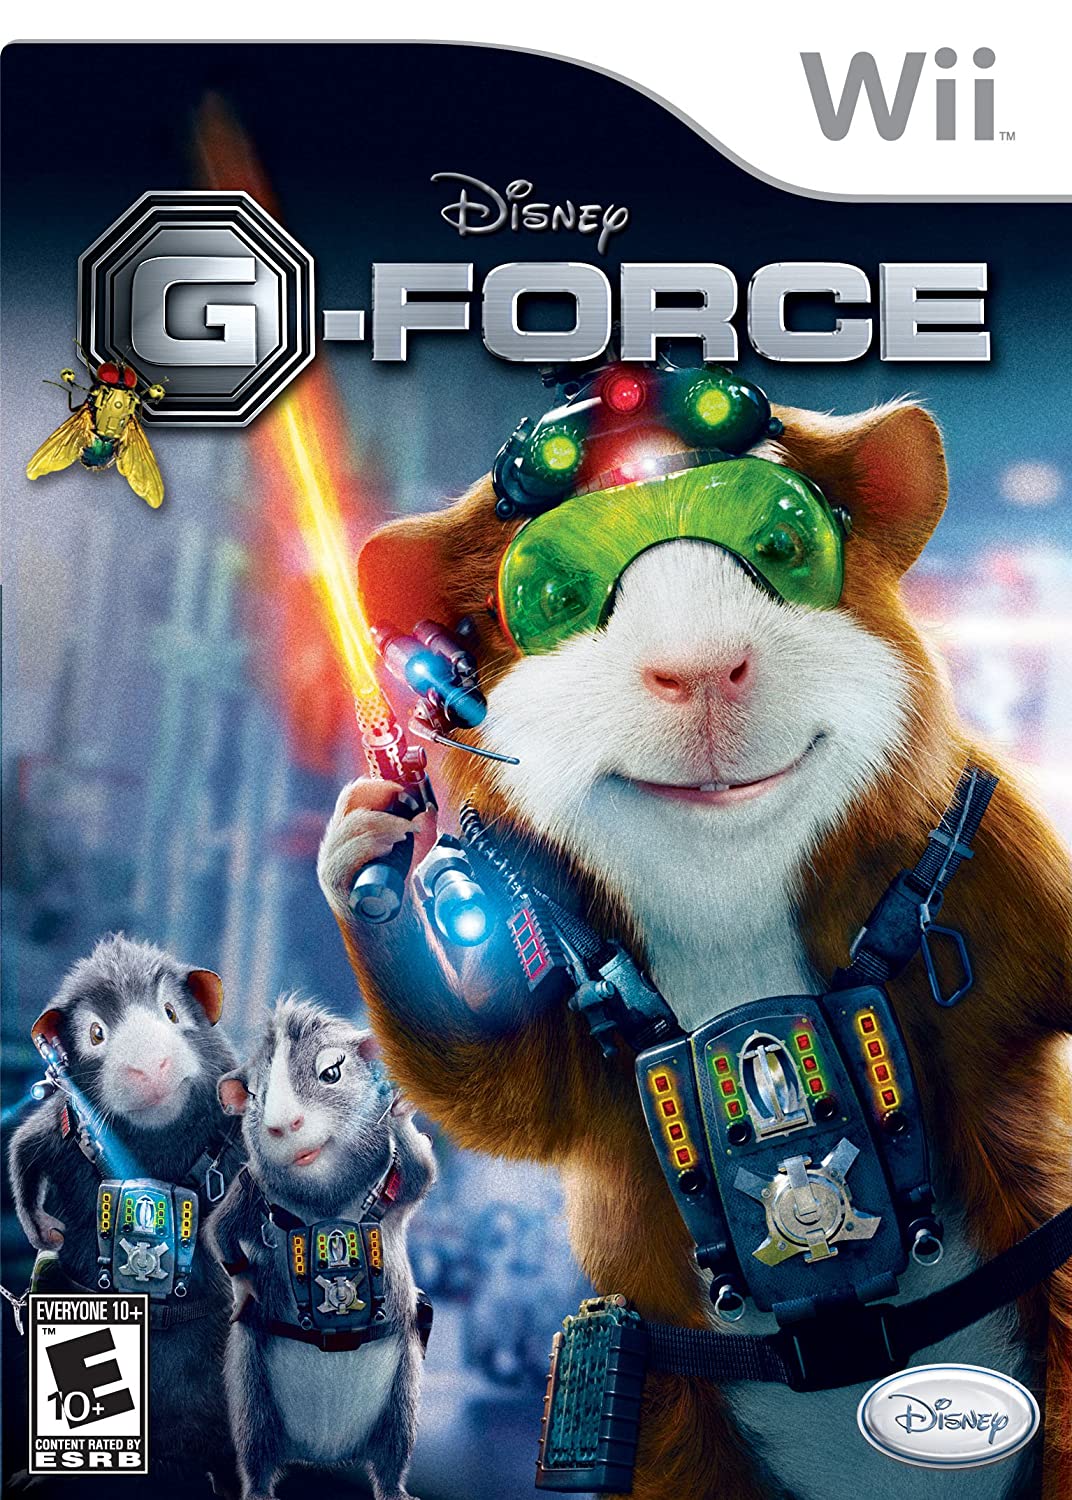 G-Force - Darkside Records